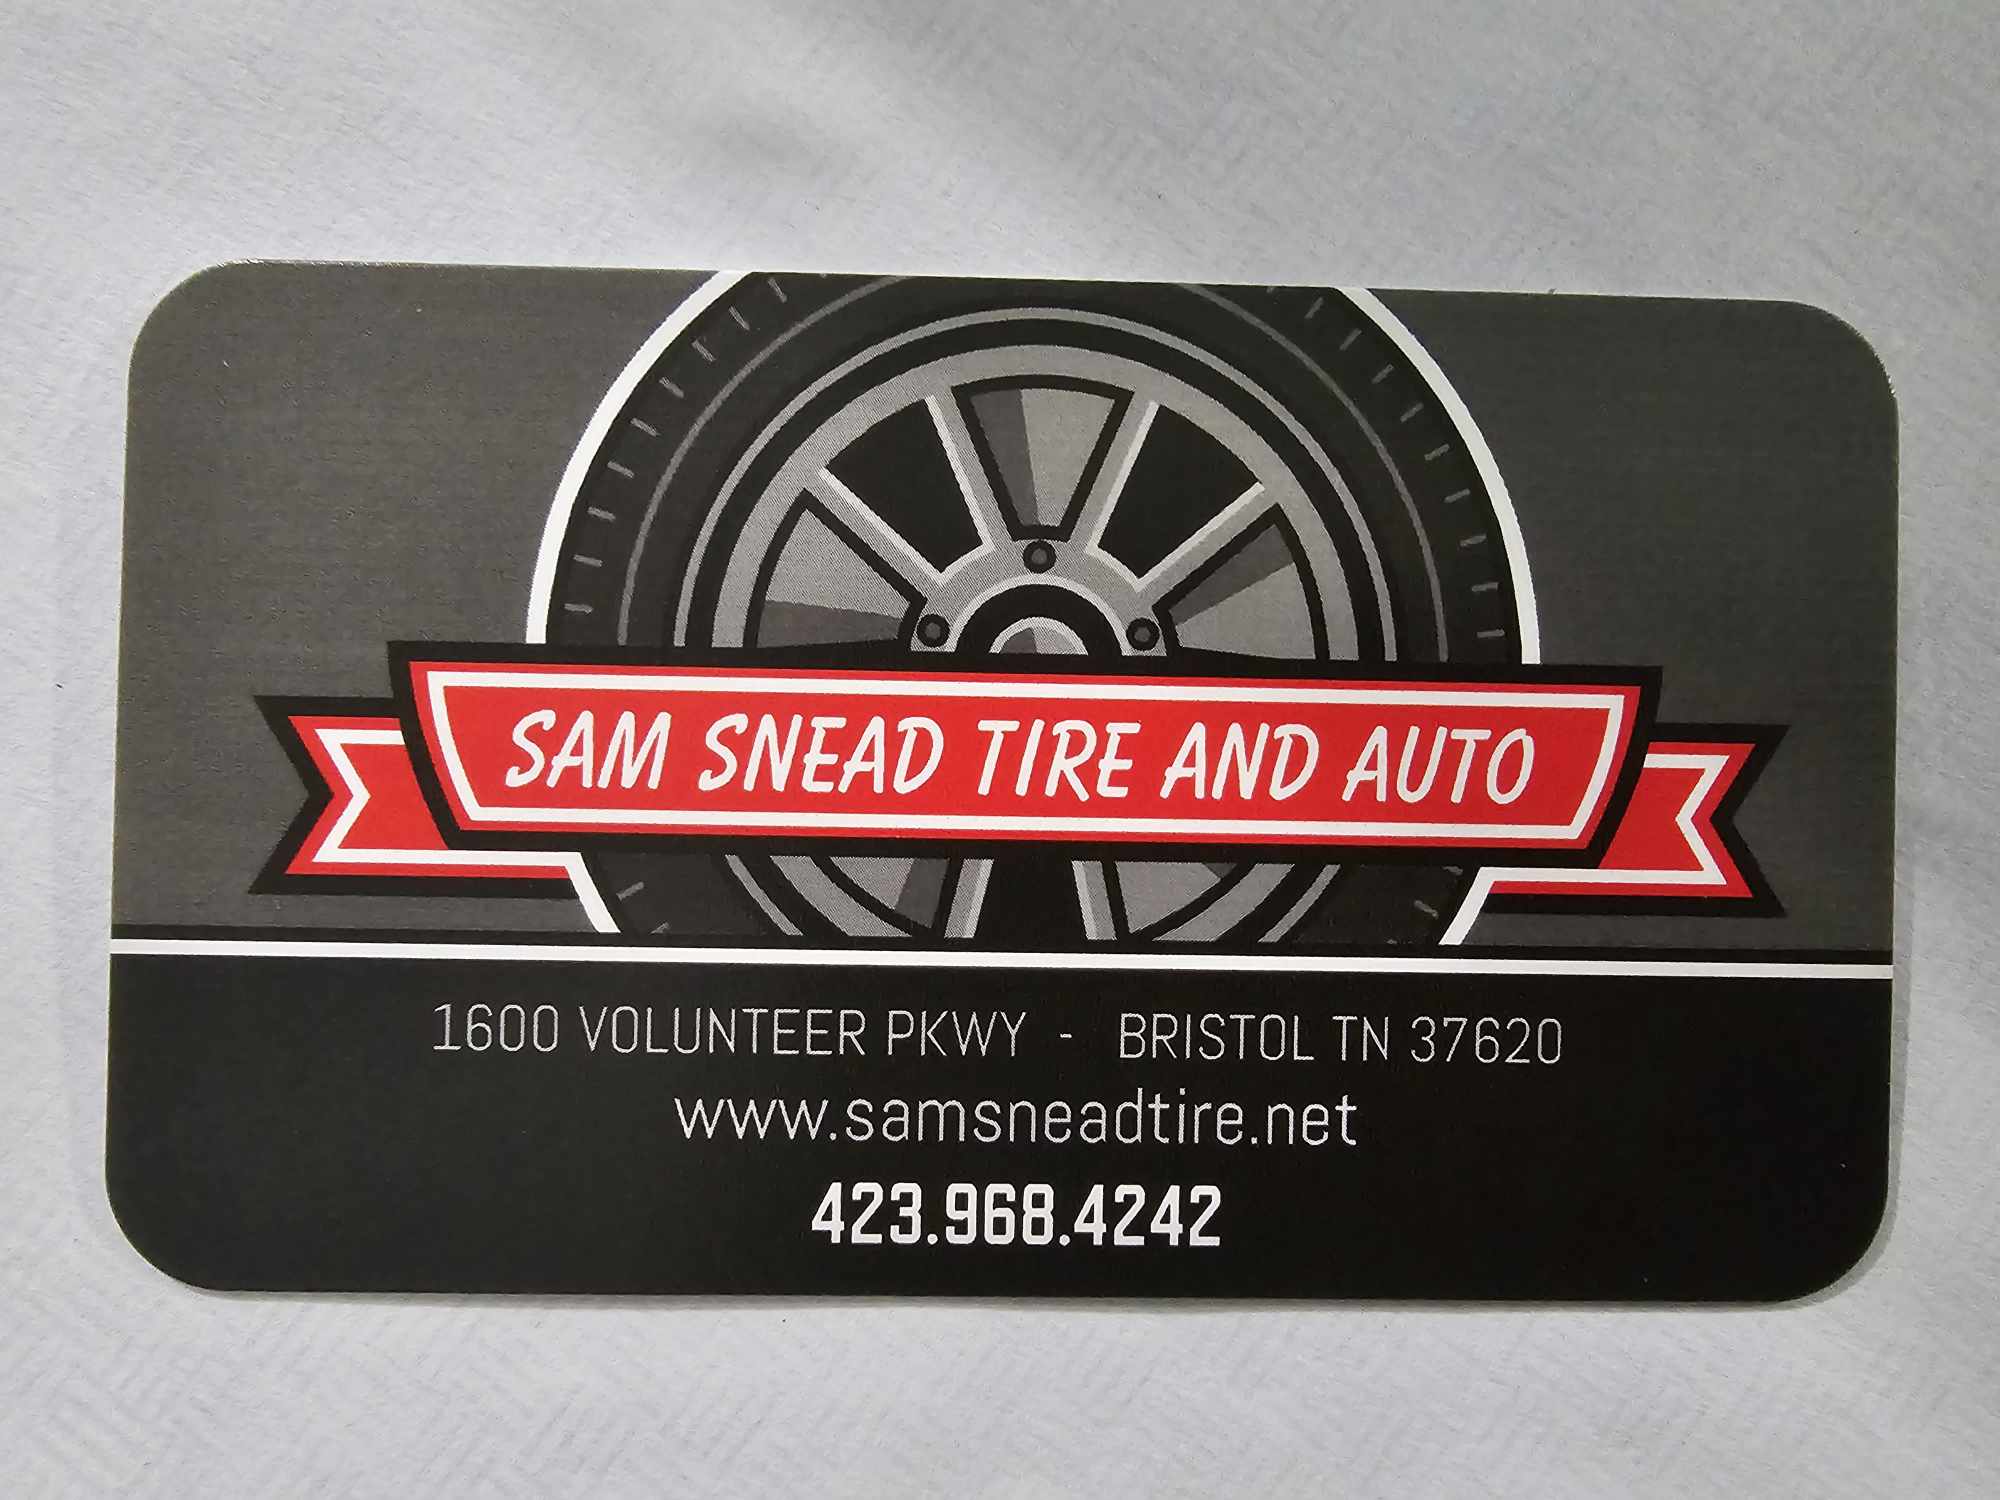 Sam Snead Tire and Auto